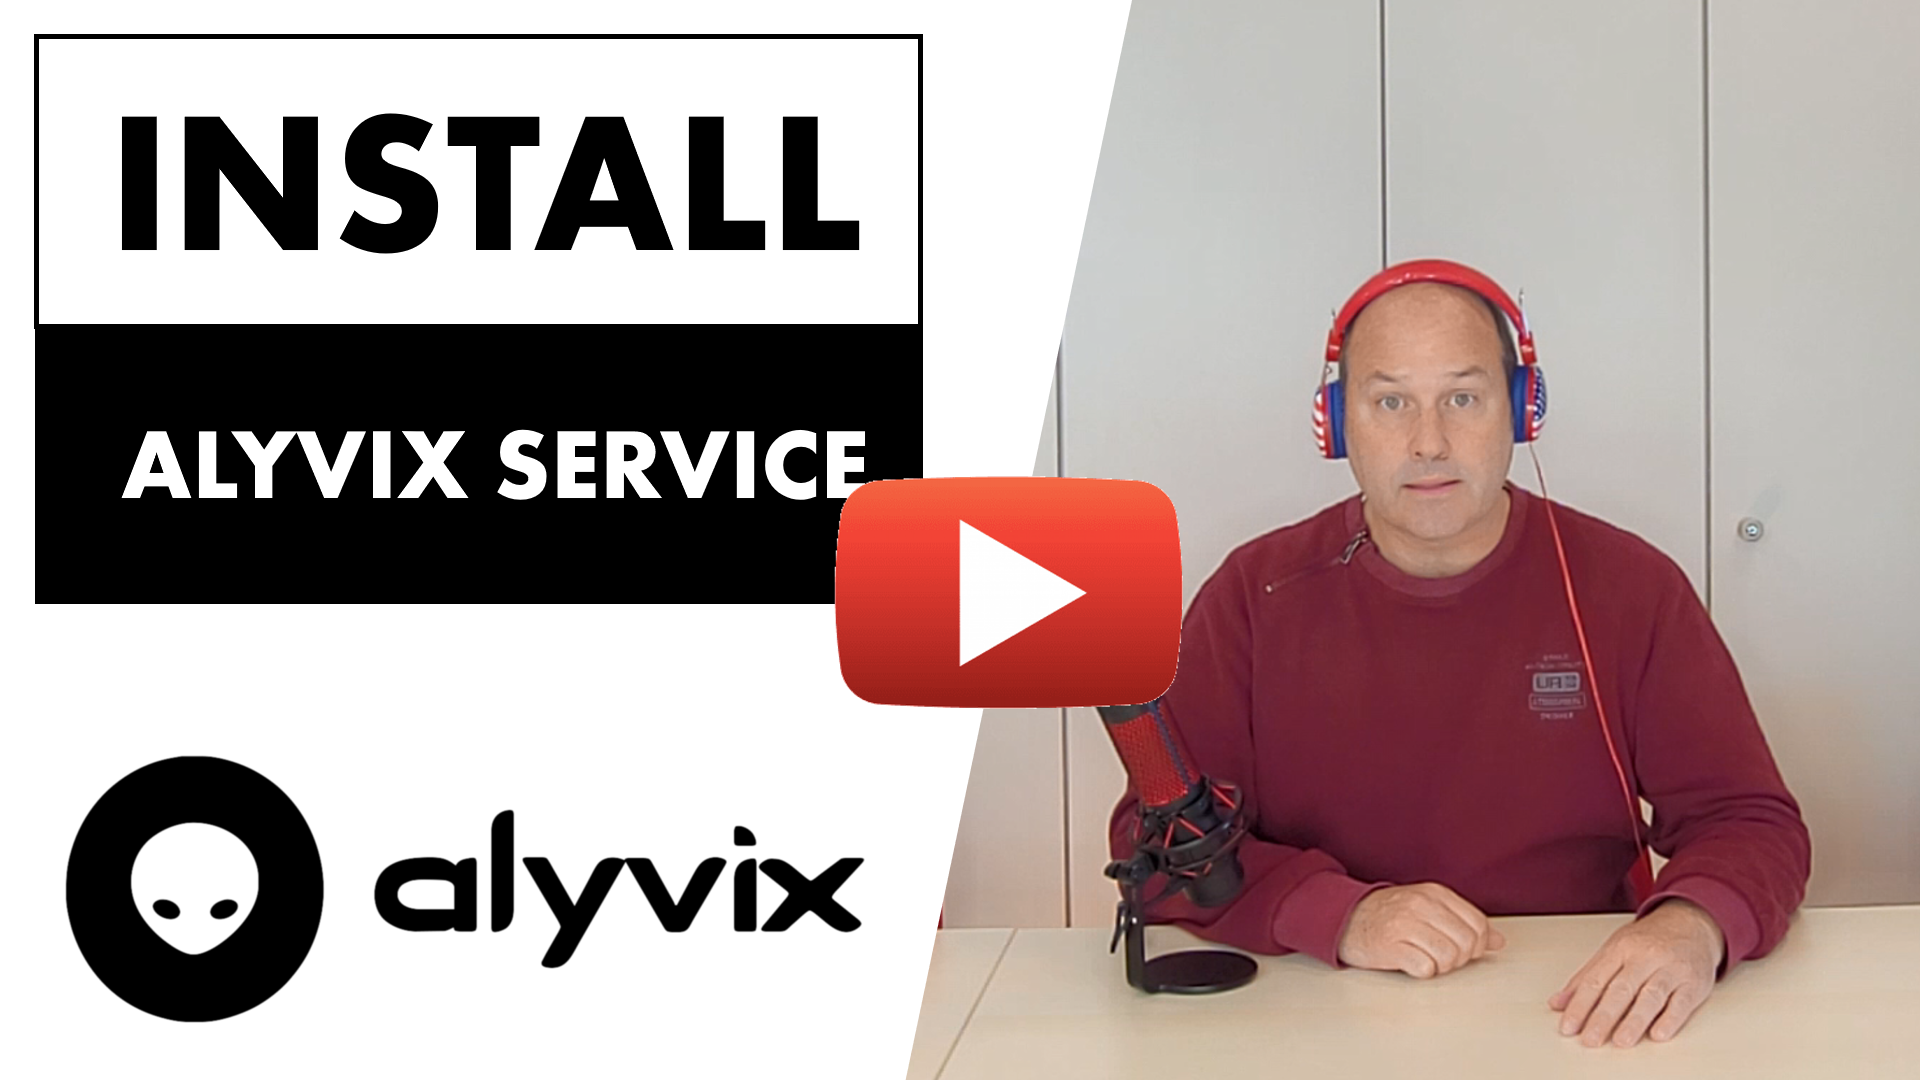 Install Alyvix Service, version 2.0.0